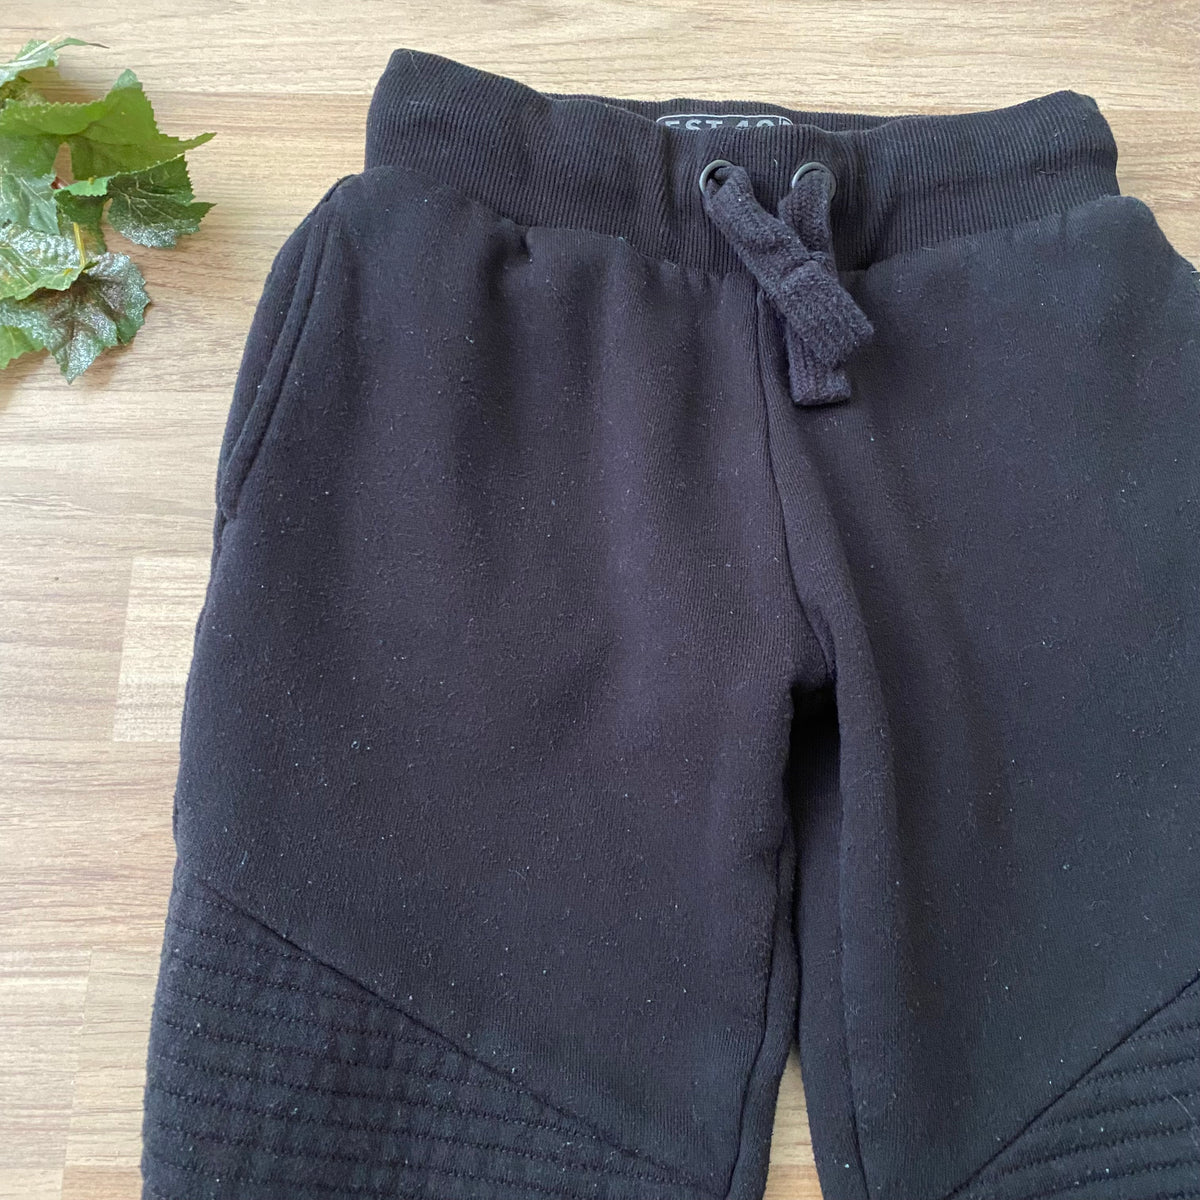 Jogging Pants (Boys Size 7-8)